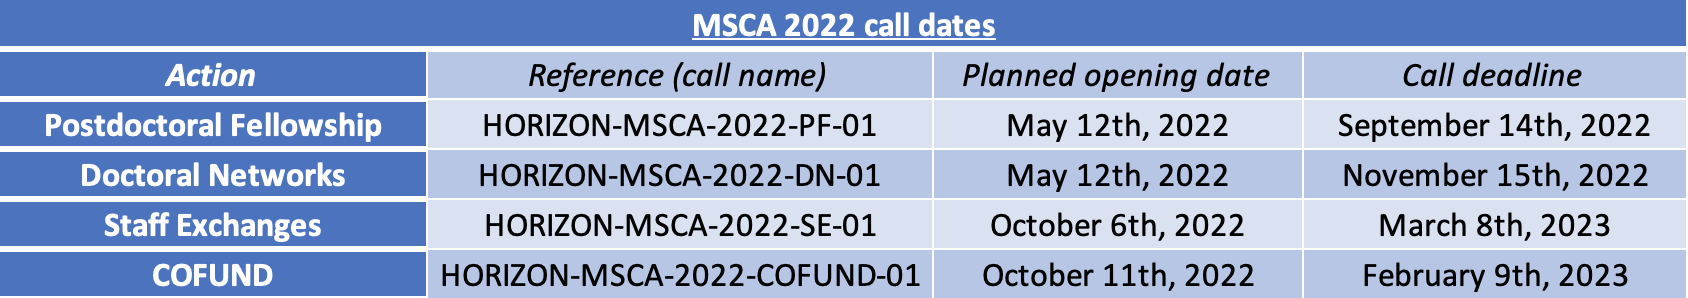 MSCA 2022 call dates